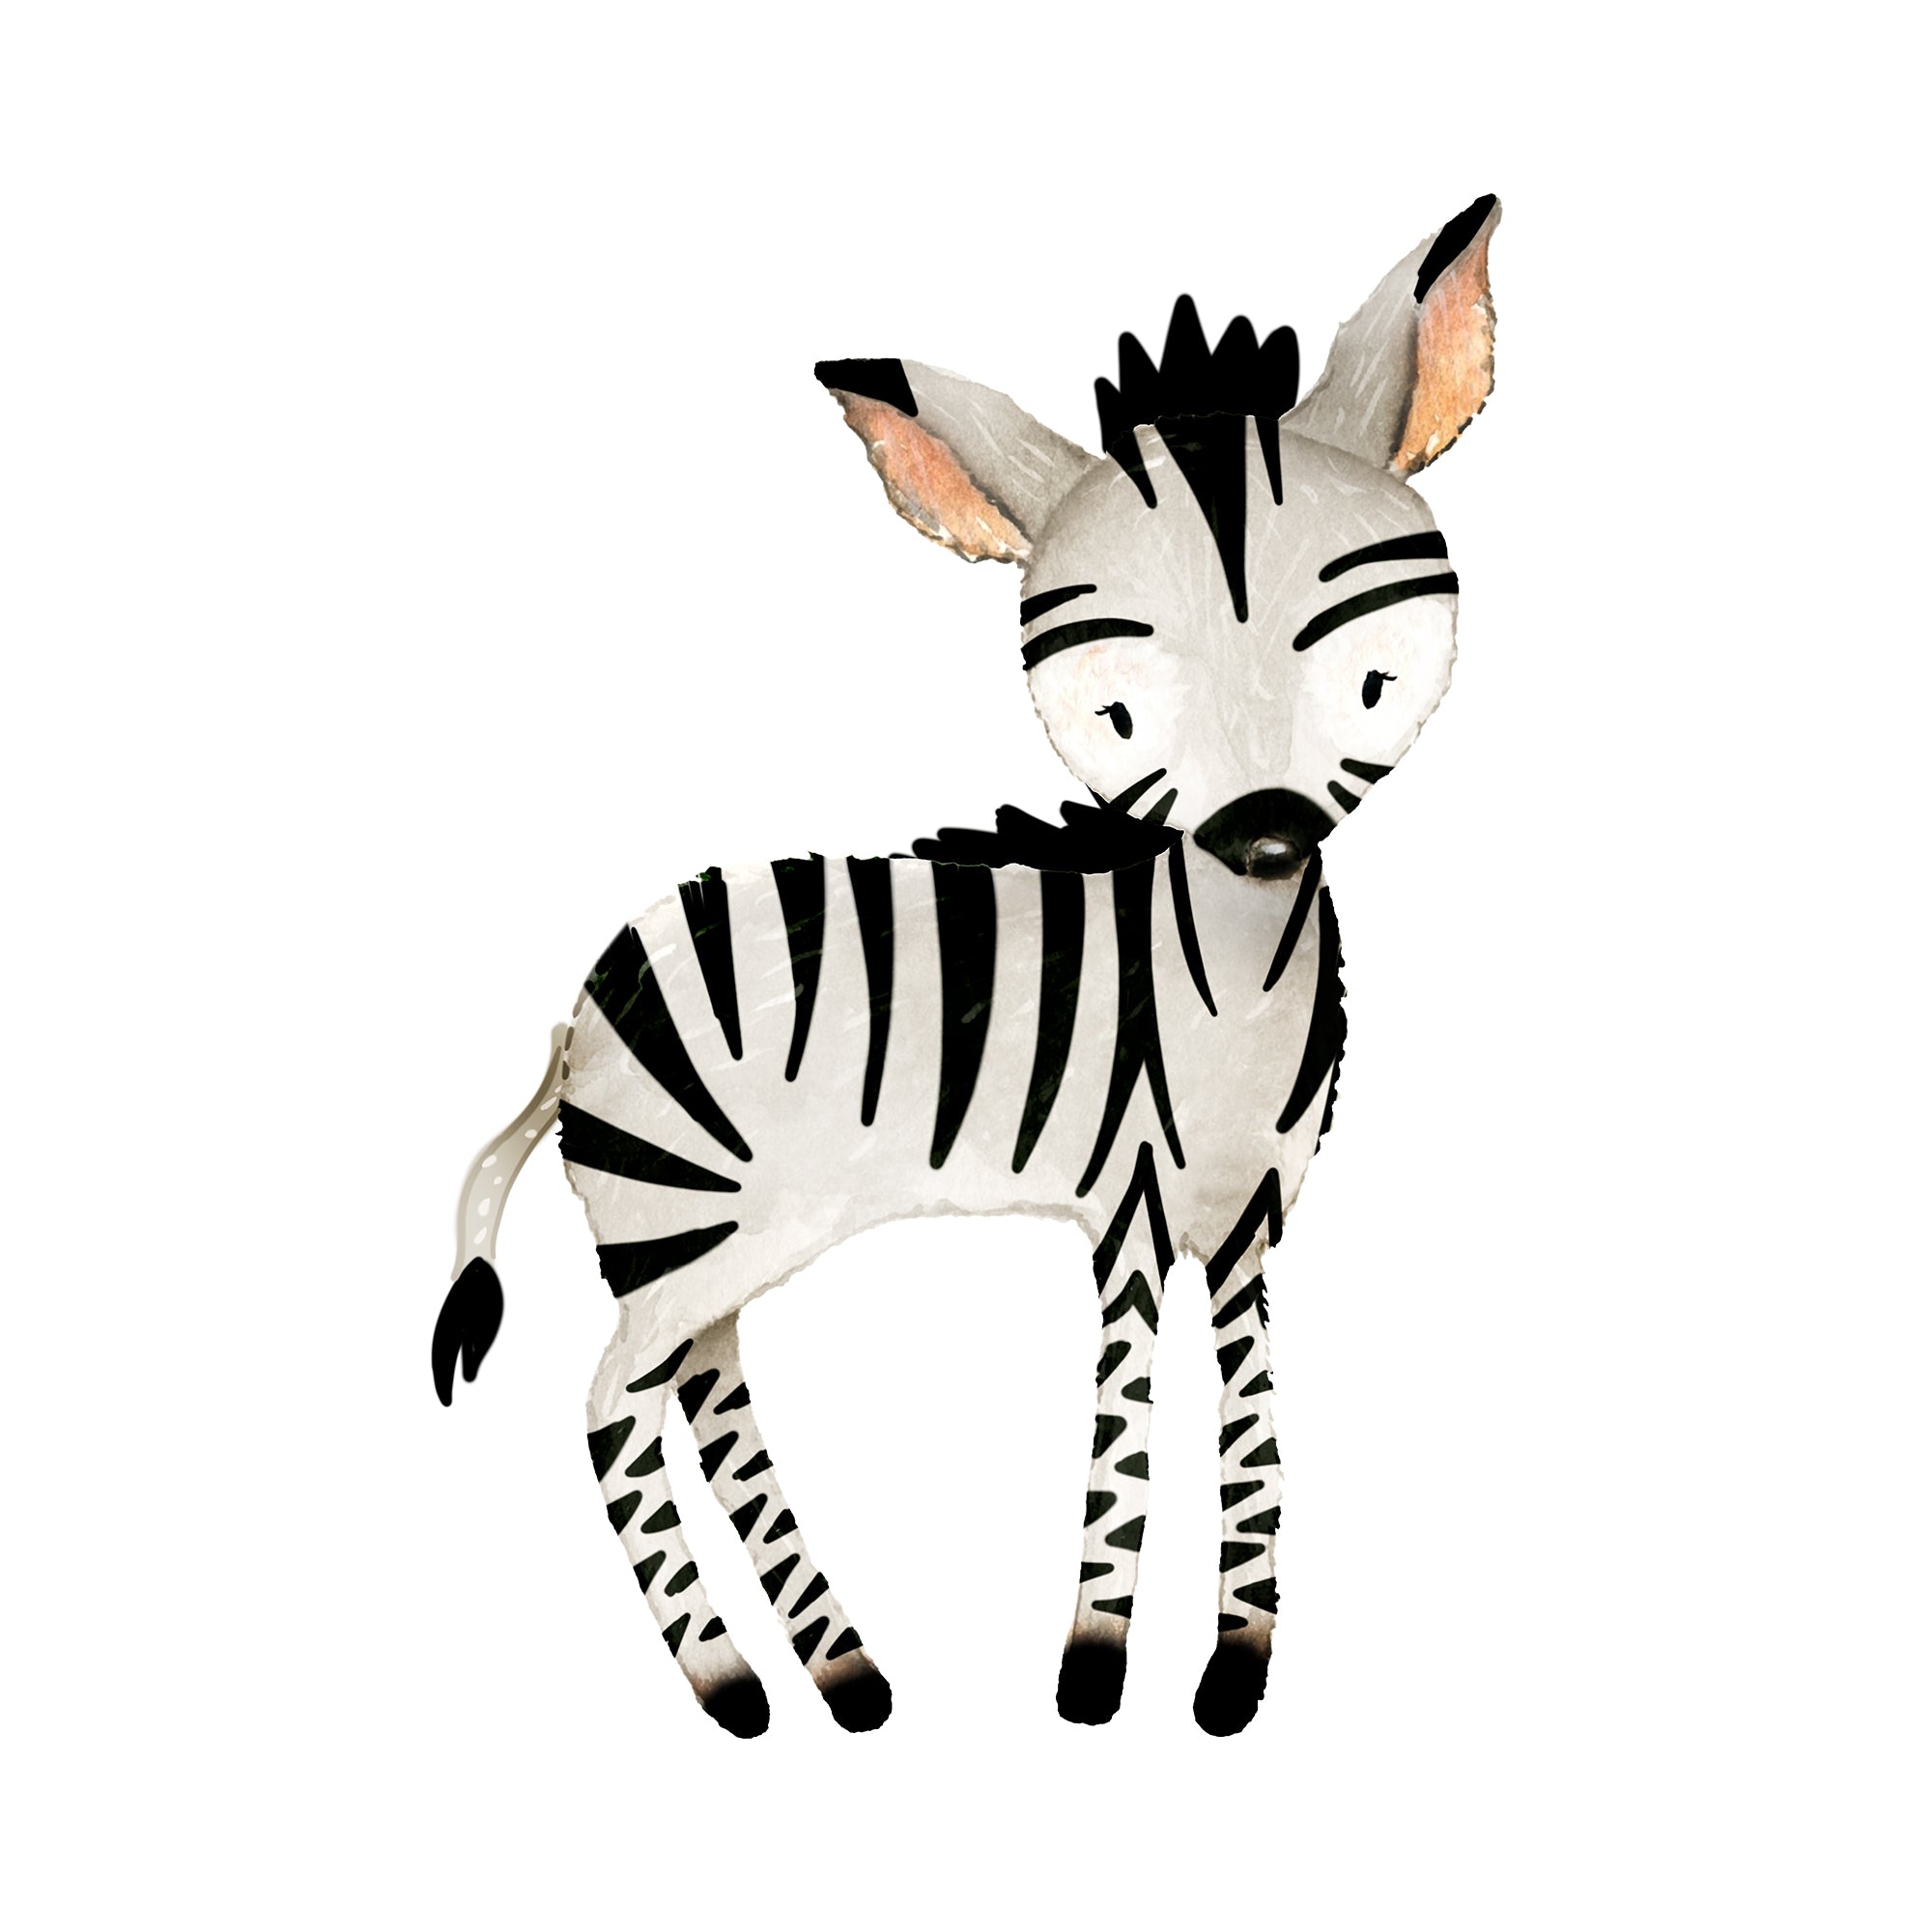 Zebra - Sebras - Safari Animals Series - Wall Decal - Great For Nurseries & Children Rooms